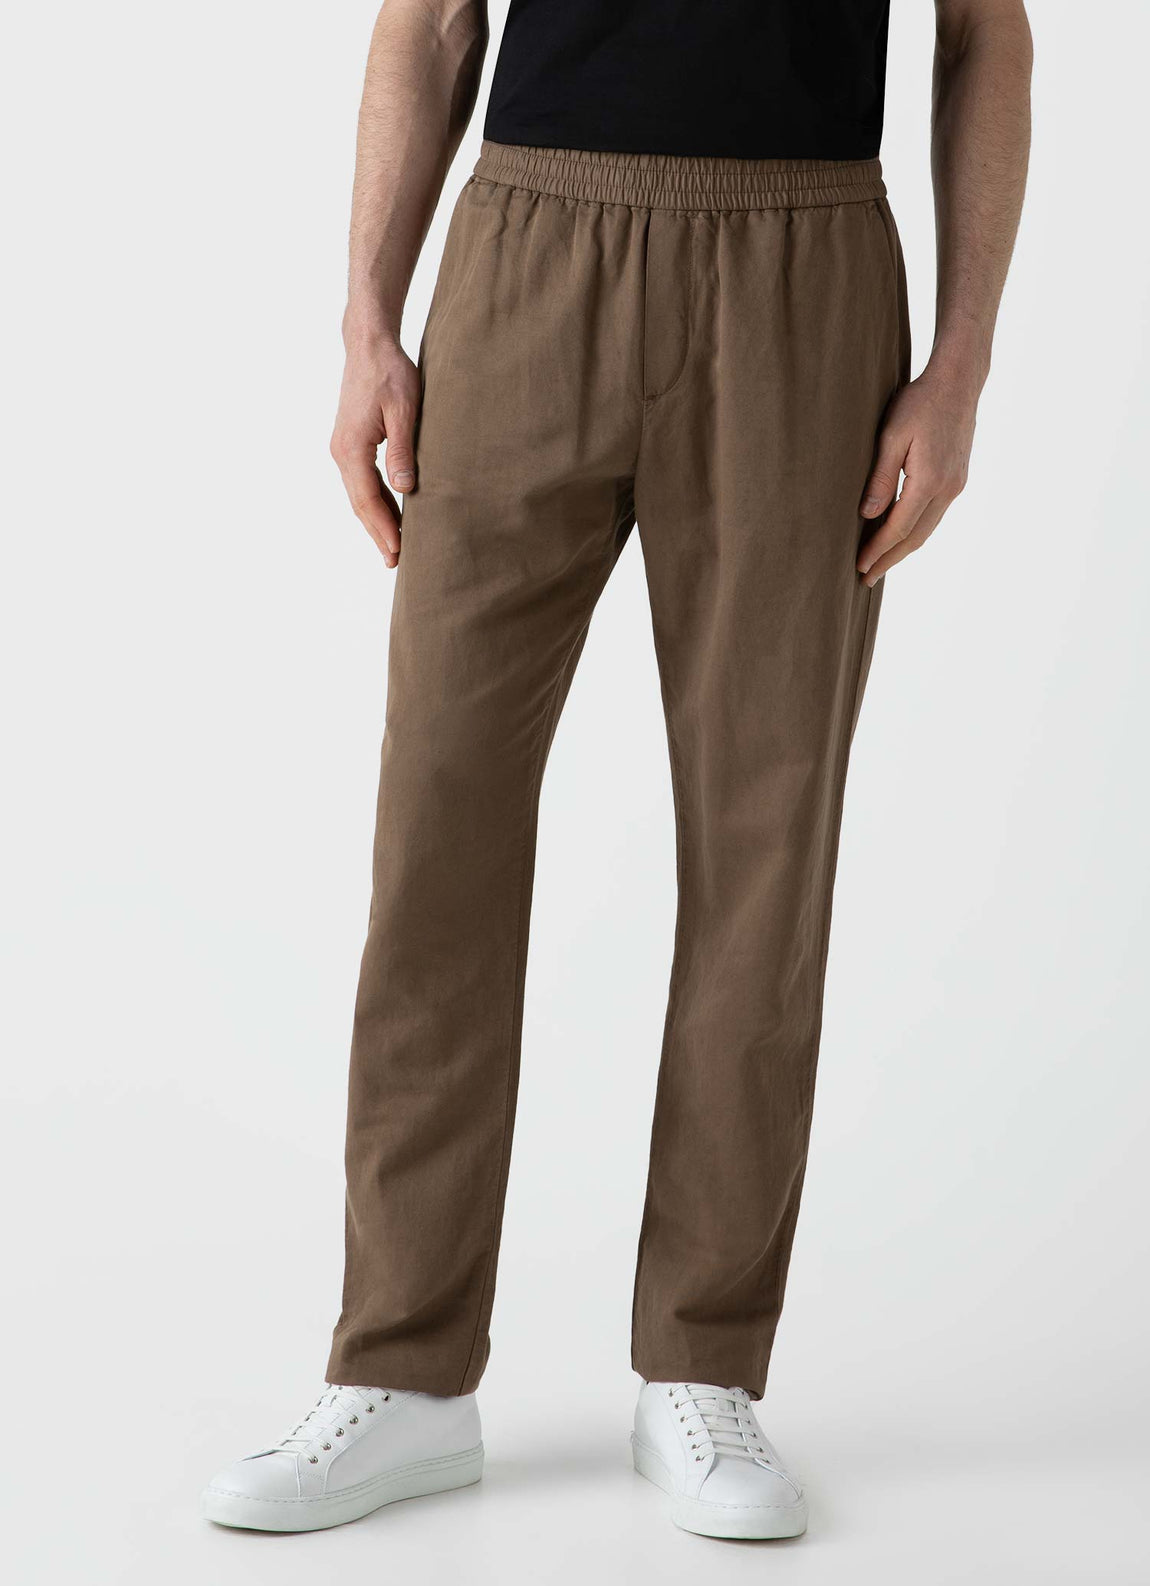 Men's Cotton Linen Drawstring Trouser in Dark Tan